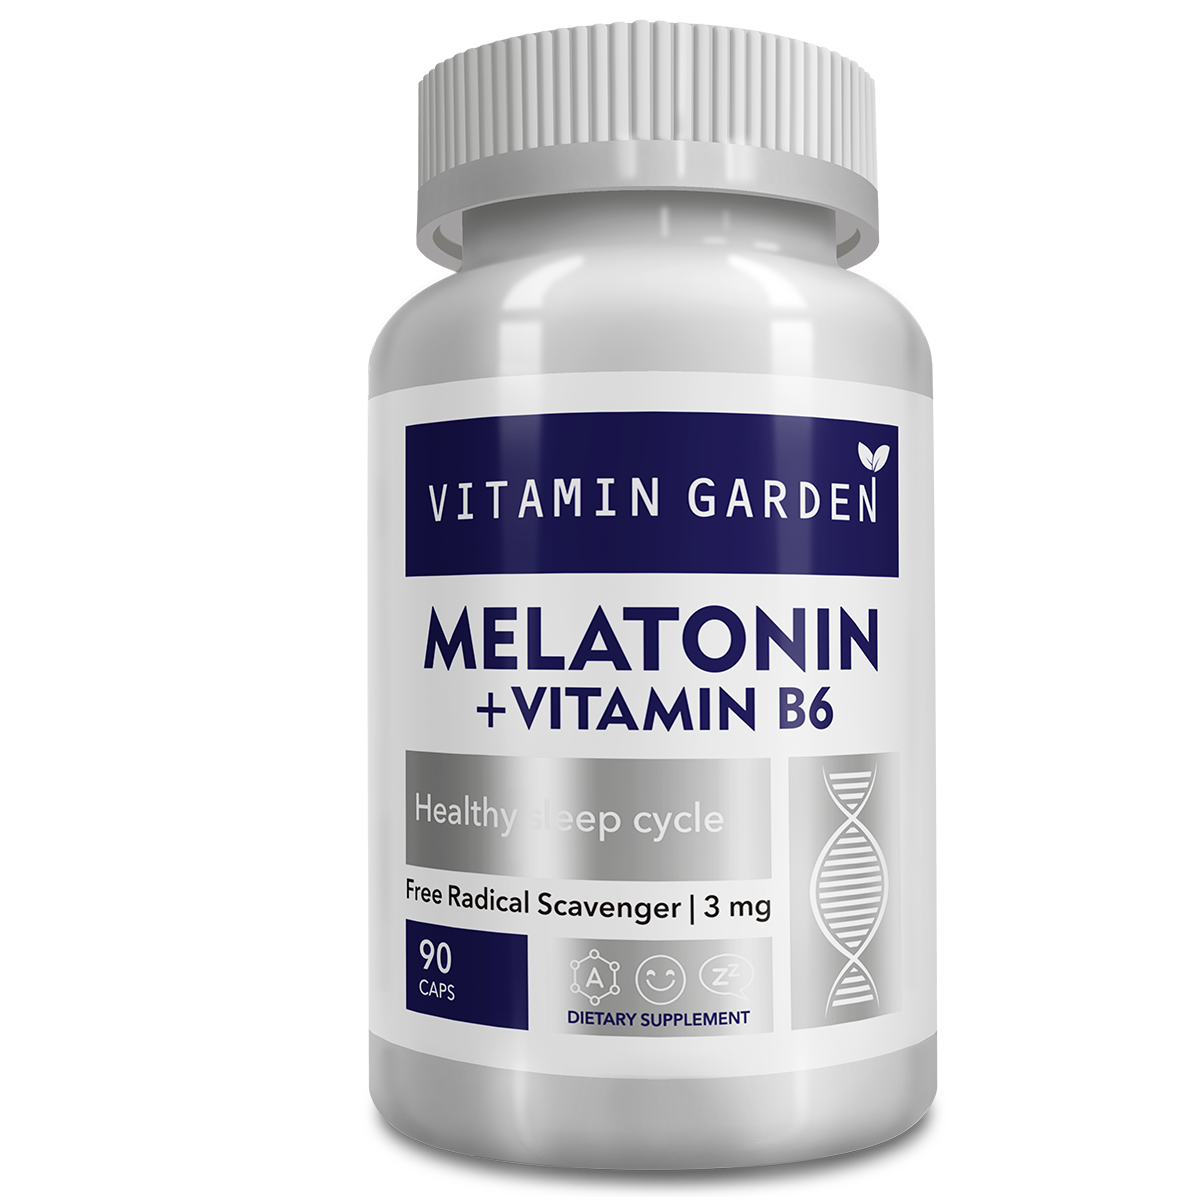 Купить Мелатонин + Витамин В6, Мелатонин с витамином В6 VITAMIN GARDEN LE Melatonin + Vitamin B6 капсулы 90 шт.